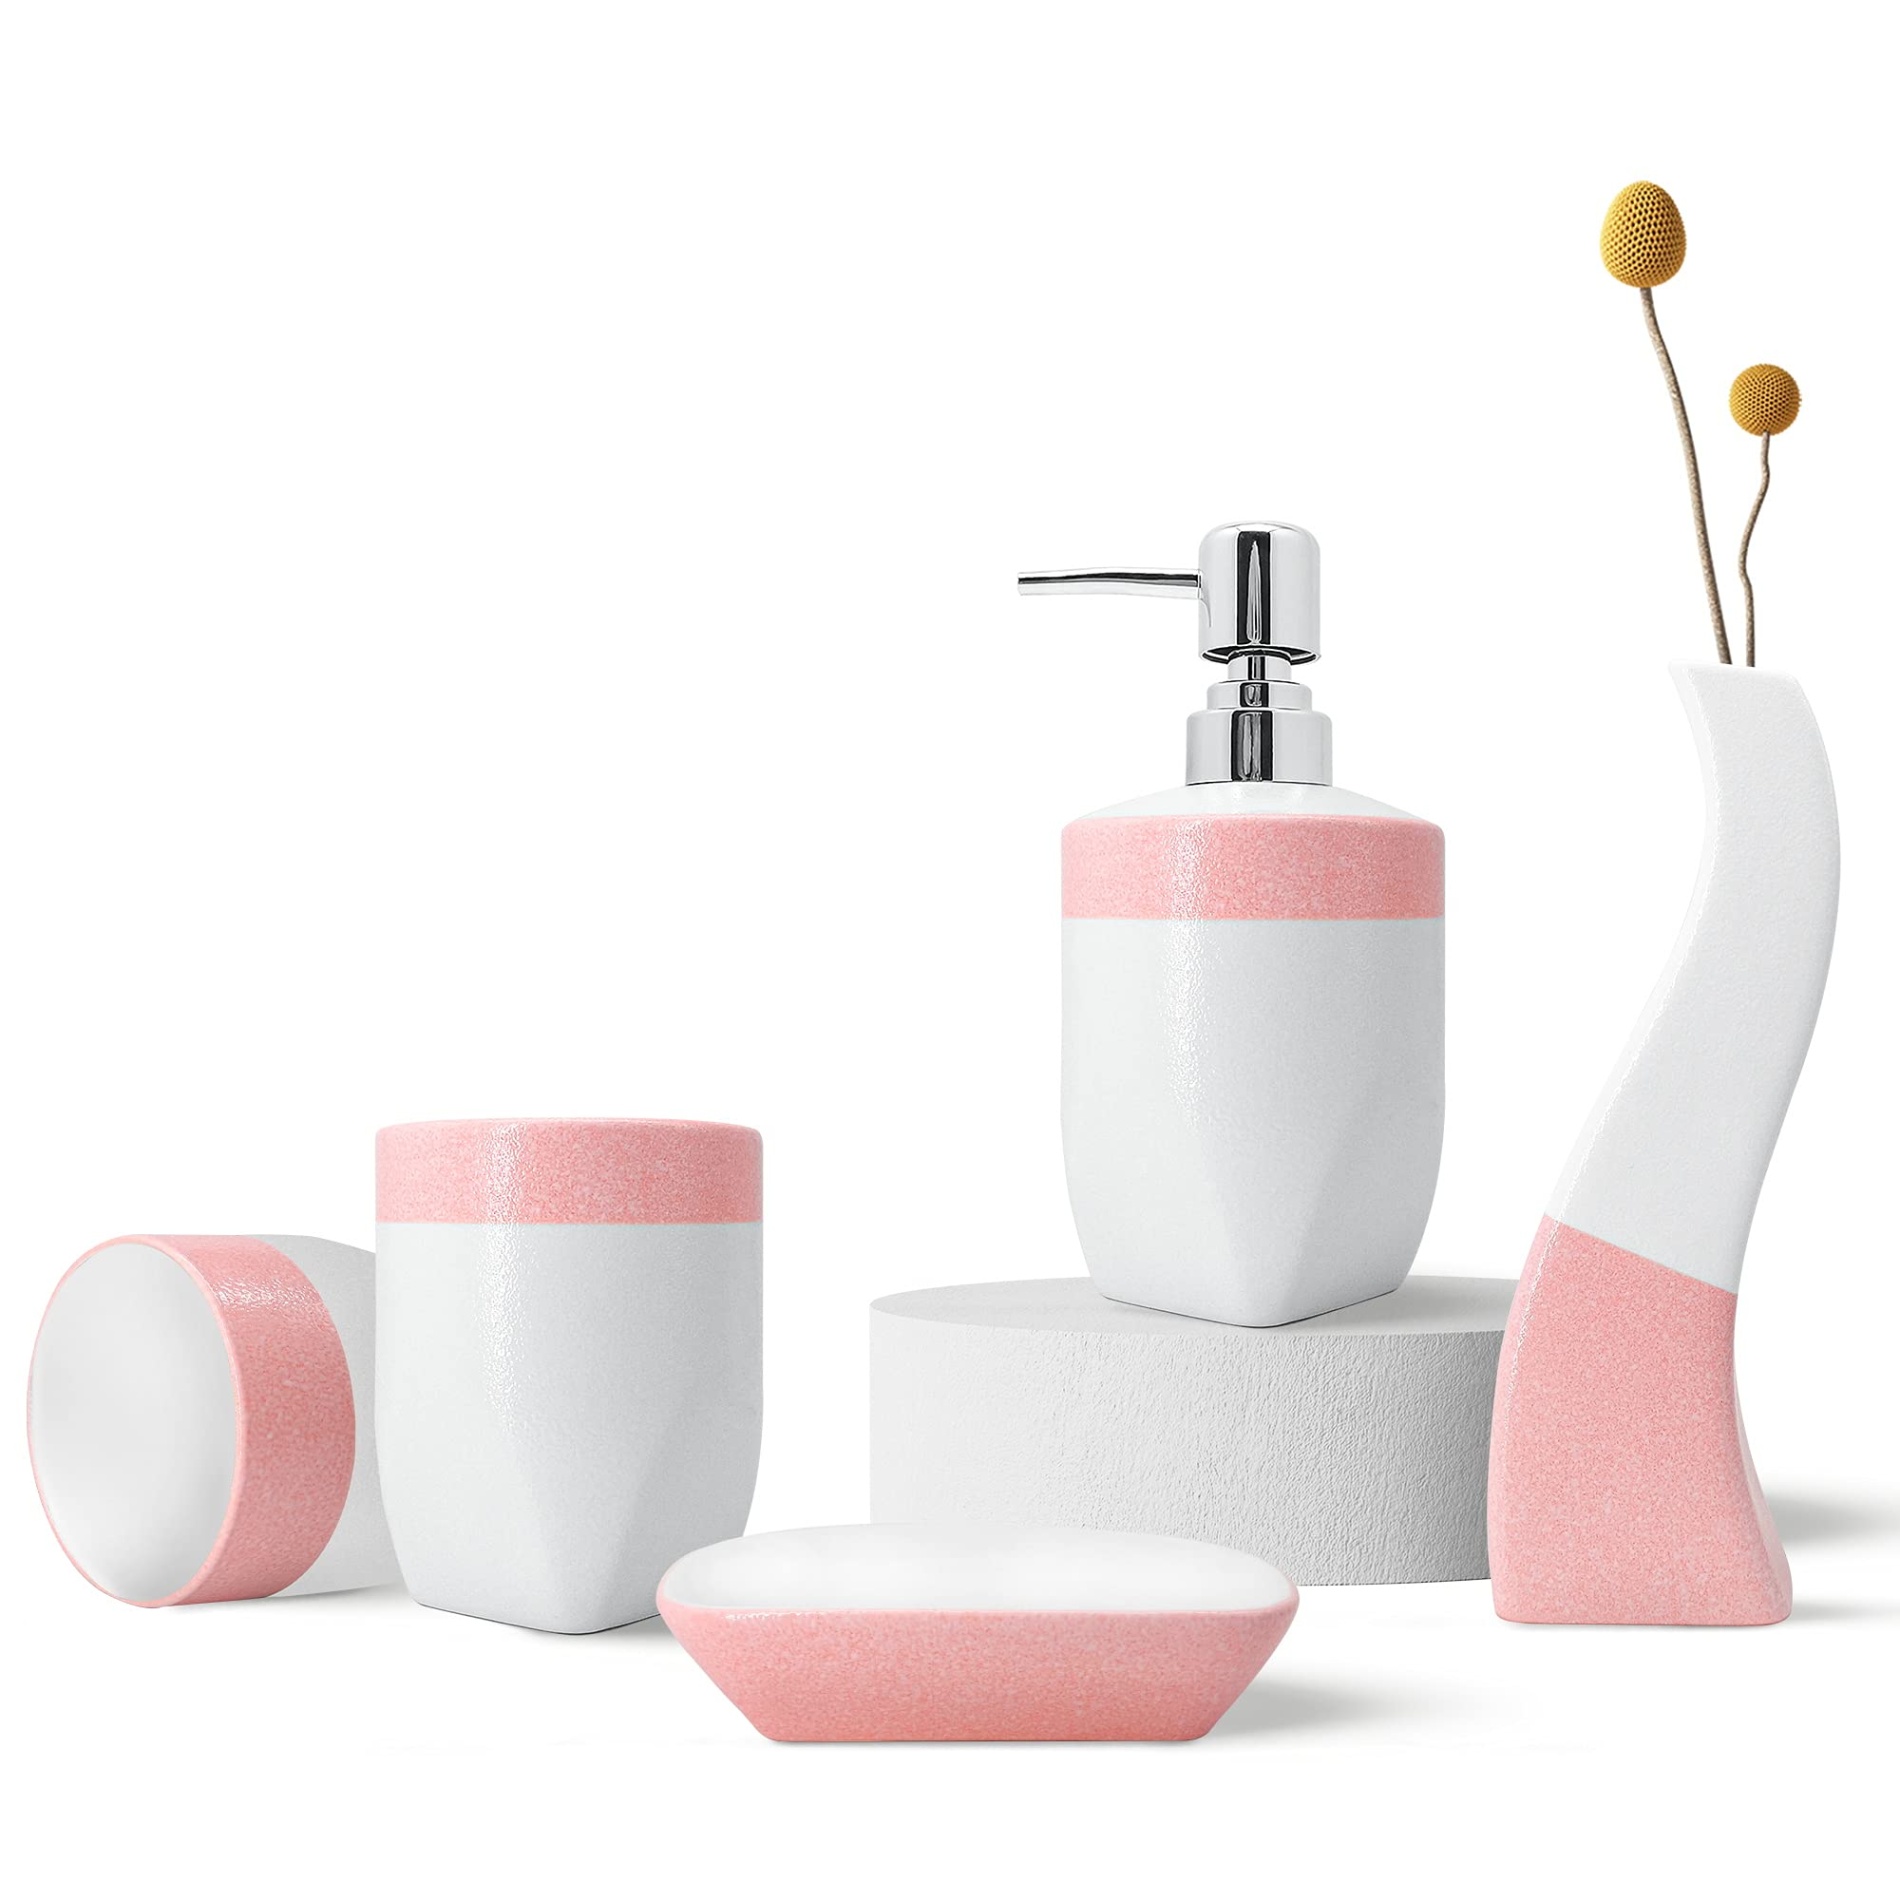 modern bathroom accessories Niche Utama Home Pink Bathroom Accessory Set  Pcs, Including Hand Pump Soap Dispenser, Soap  Dish, Toothbrush Holder and Vase,for Modern Bathroom Décor (Pink)